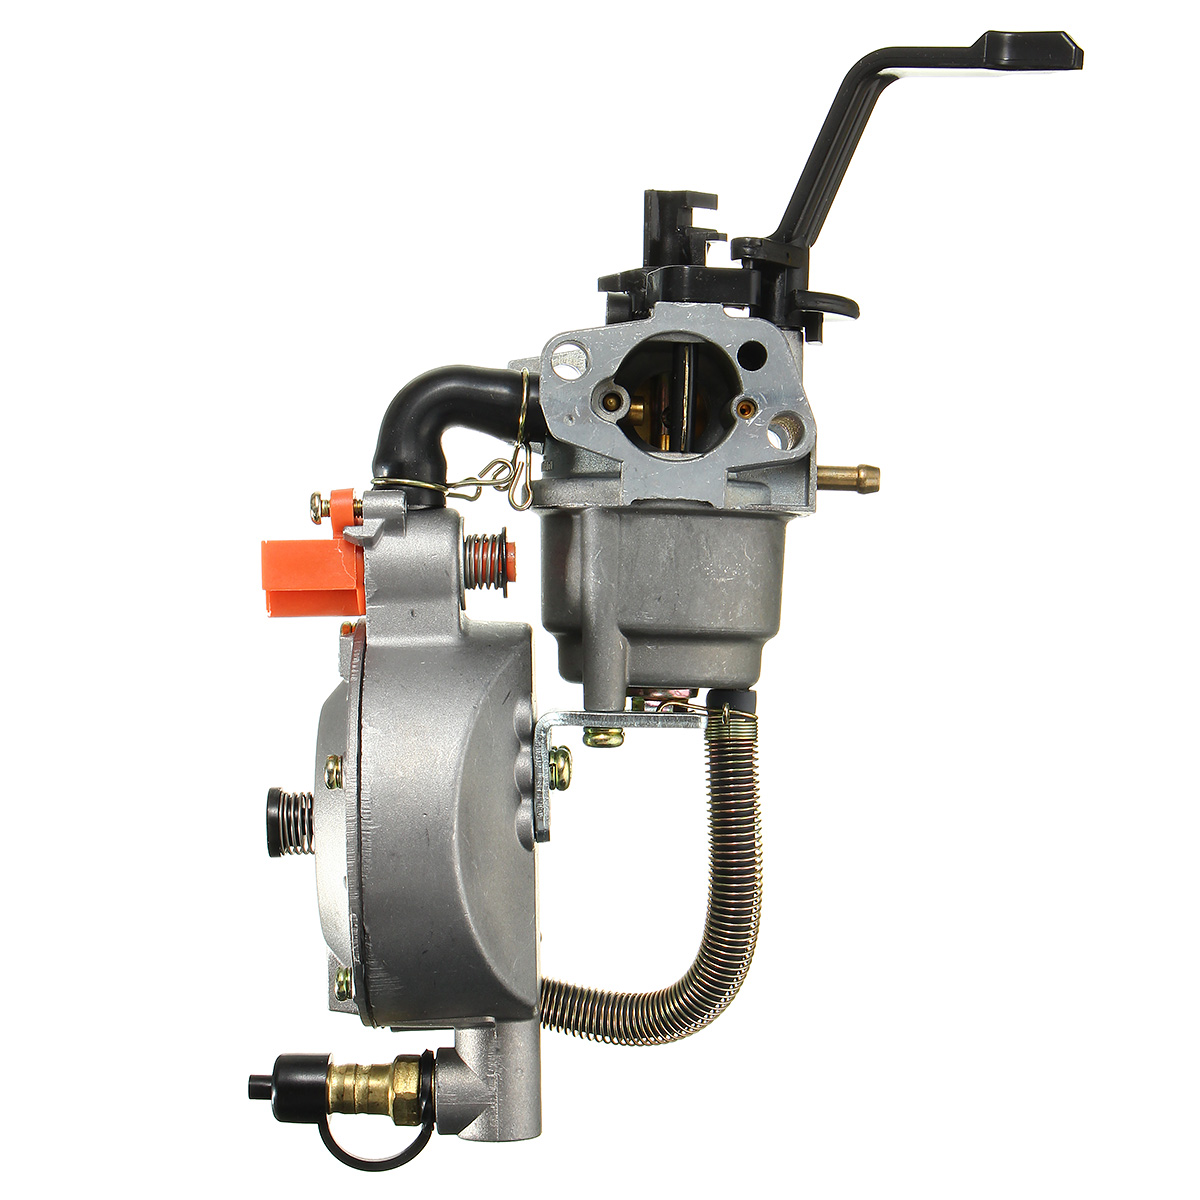 

Carburetor Carb For Water Pump Generator Engine 170F GX200 Dual Fuel